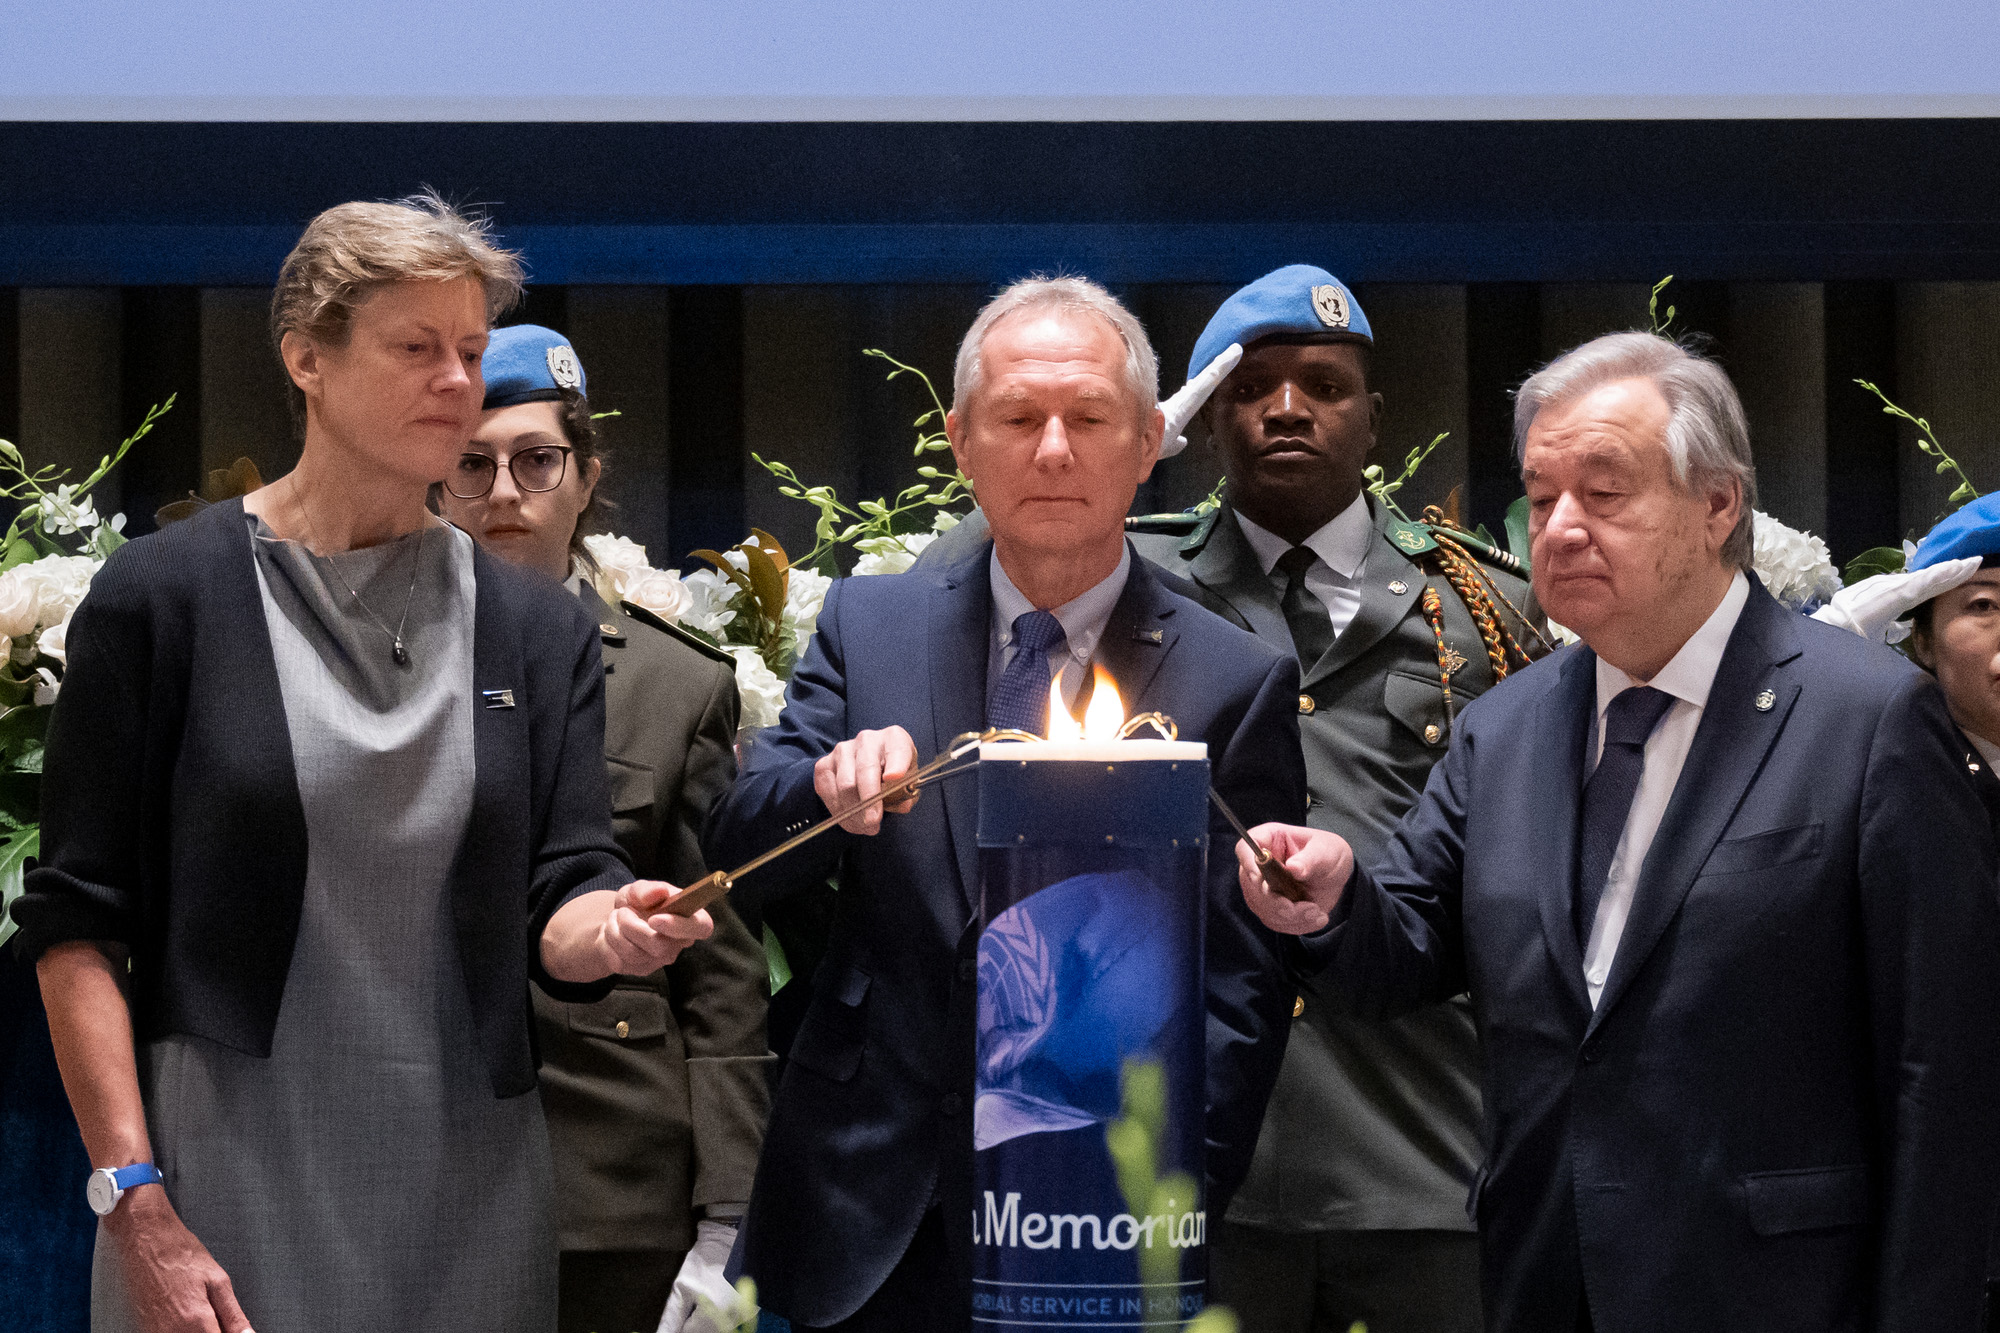 Three UN Officials light a candle